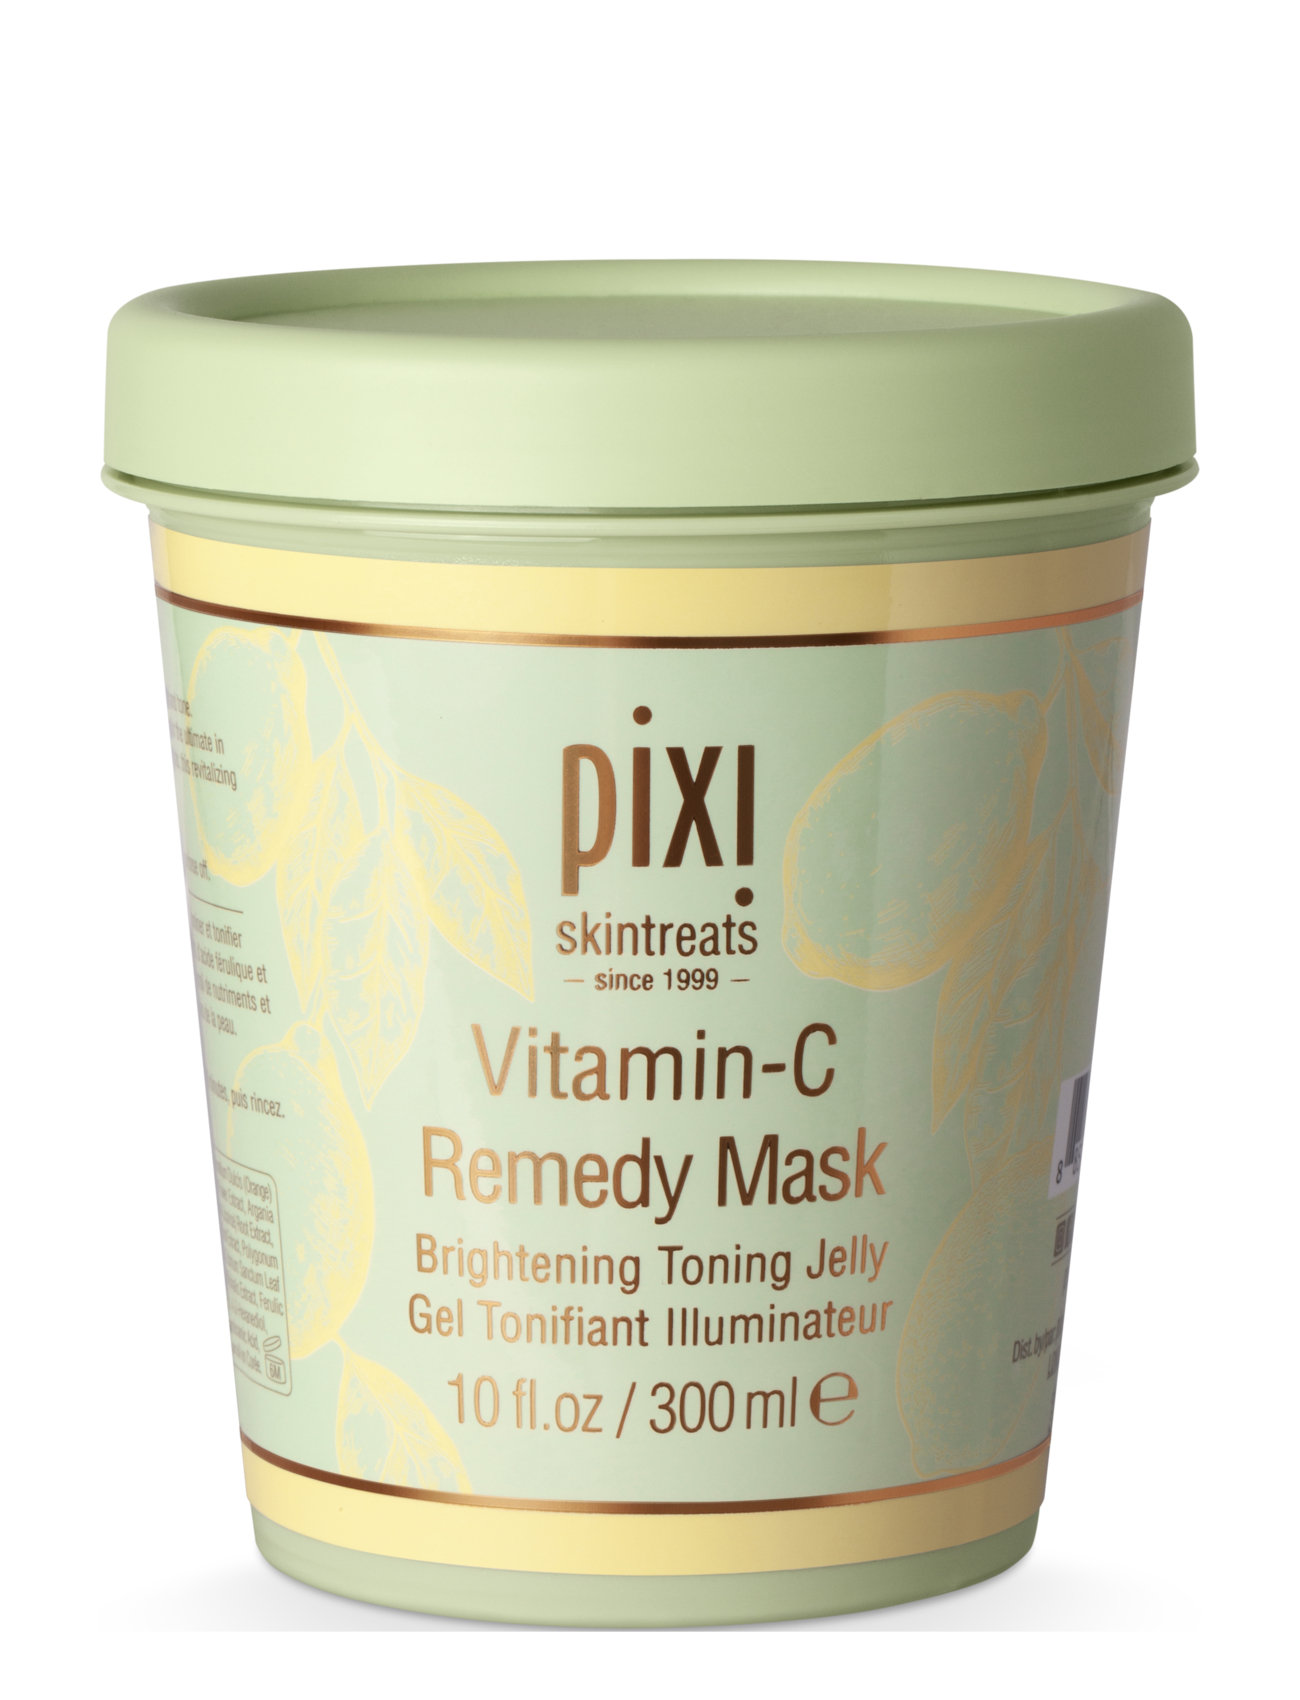 Vitamin-C Remedy Mask Beauty Women Skin Care Face Face Masks Moisturizing Mask Nude Pixi